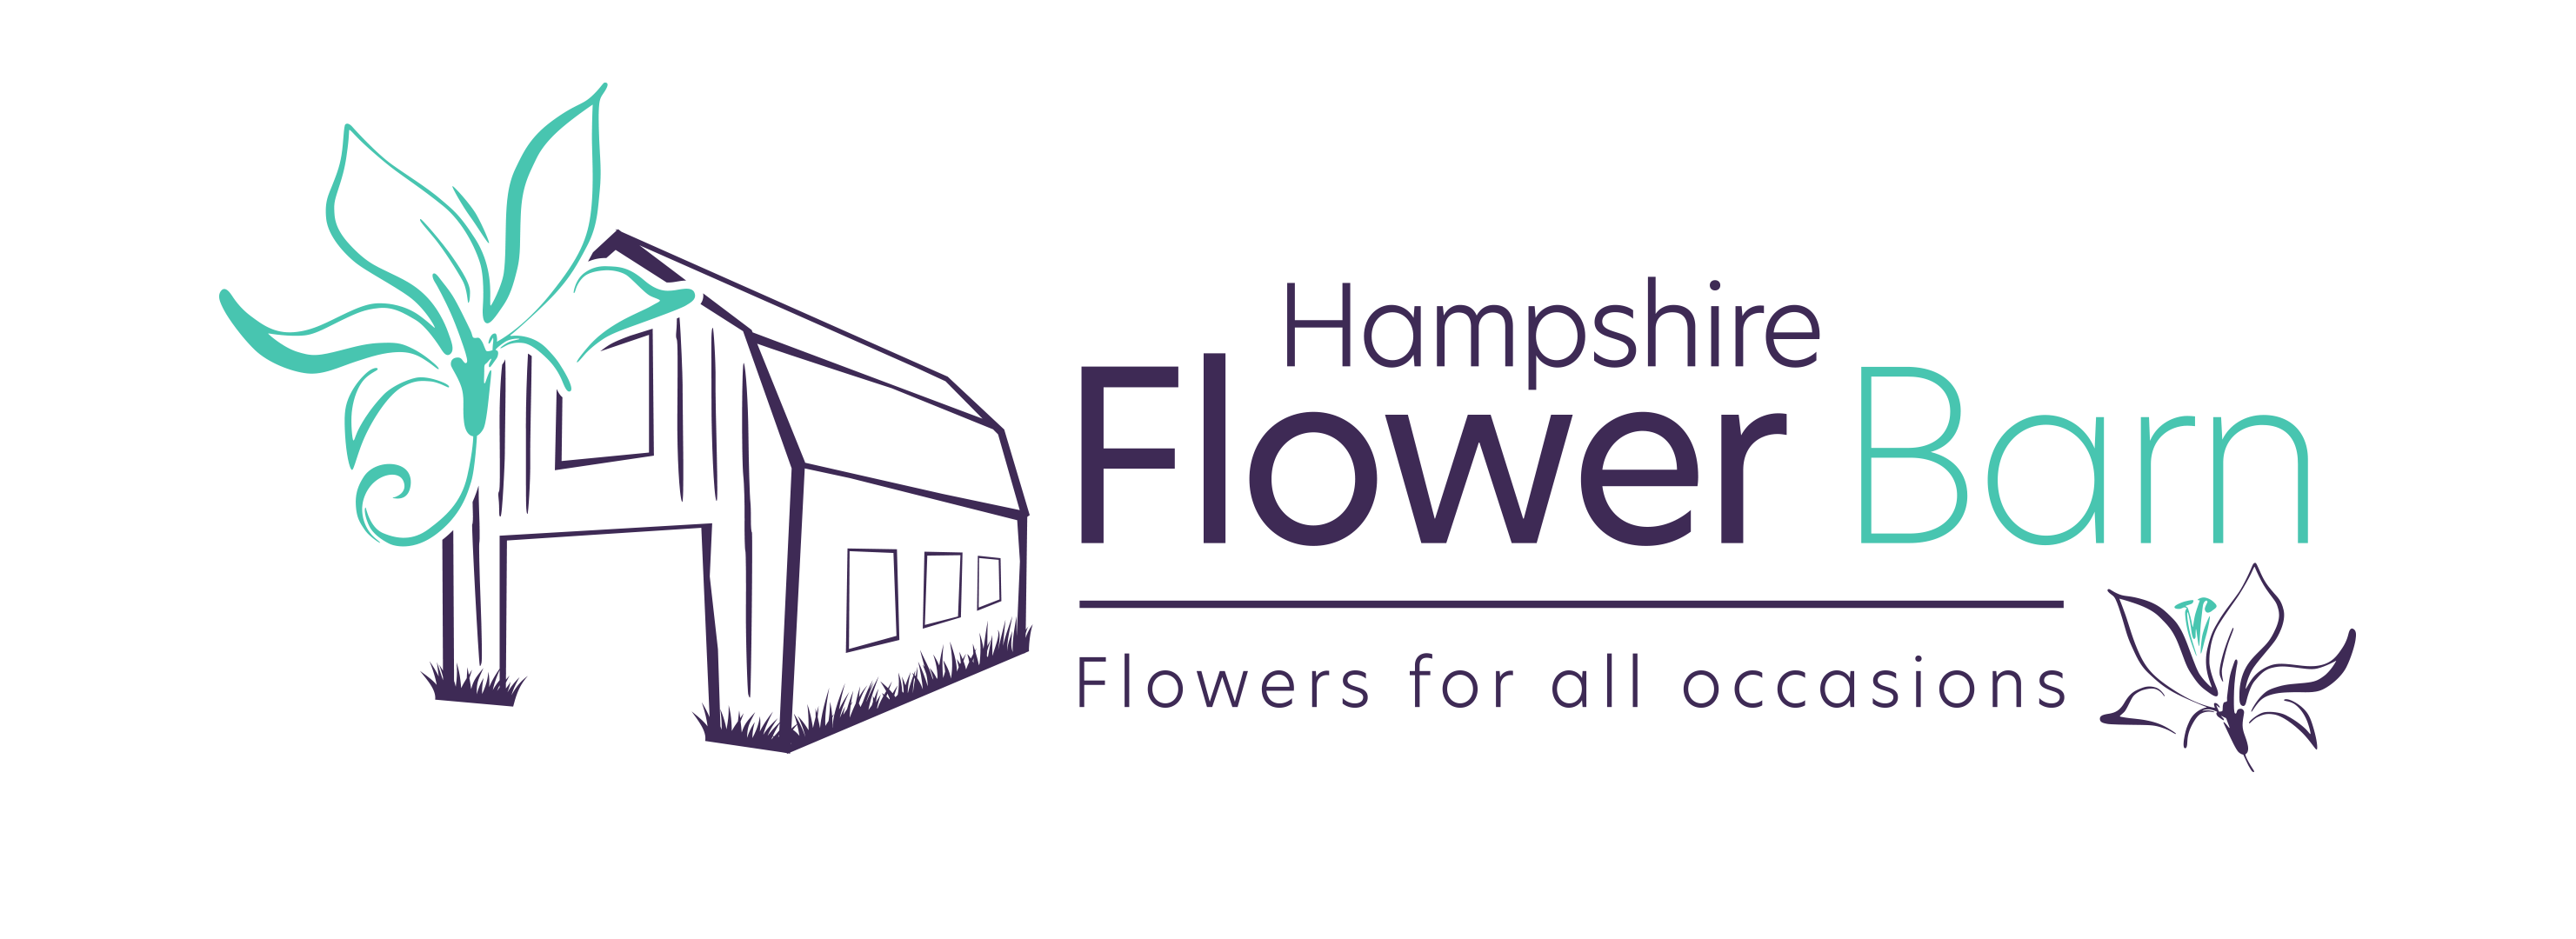 Hampshire Flower Barn